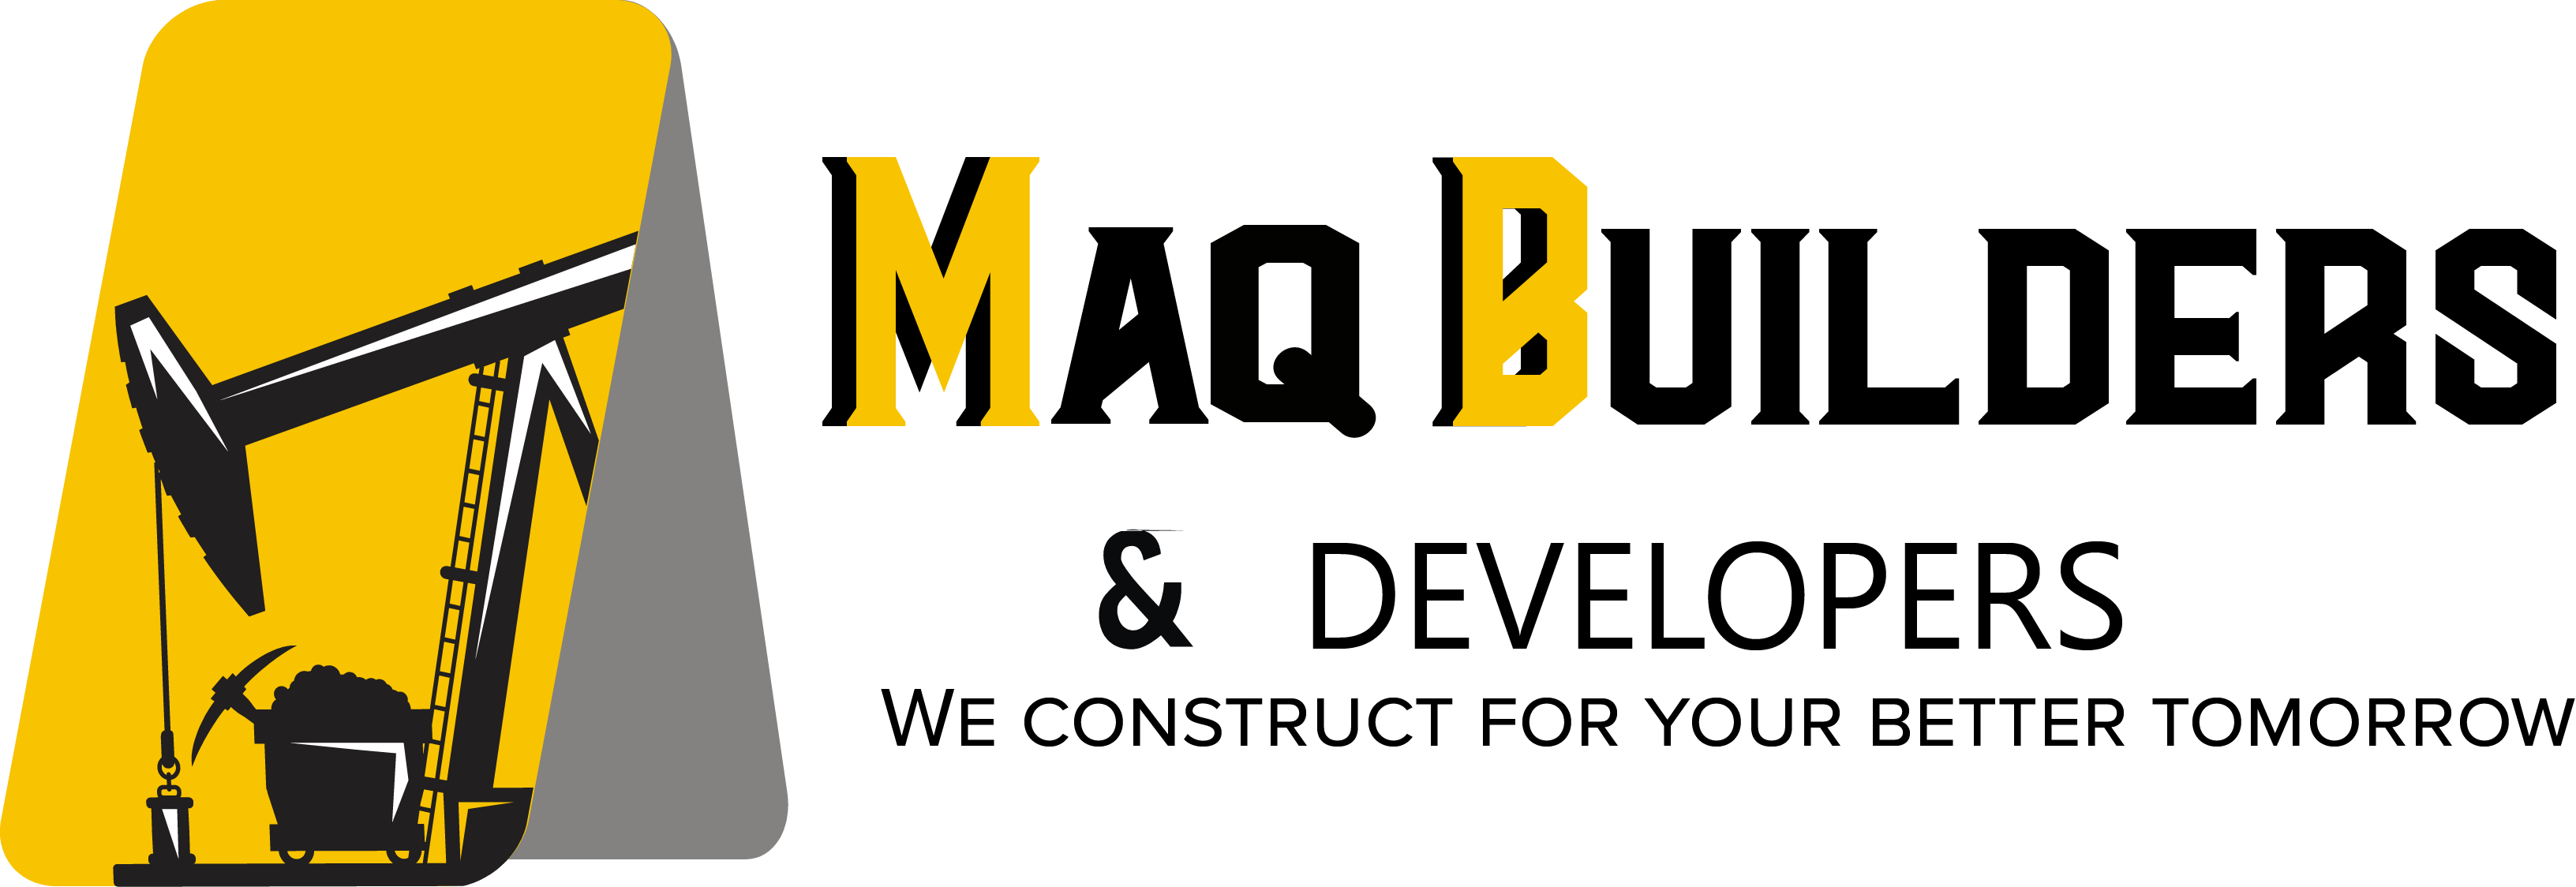 Maq Builders - 